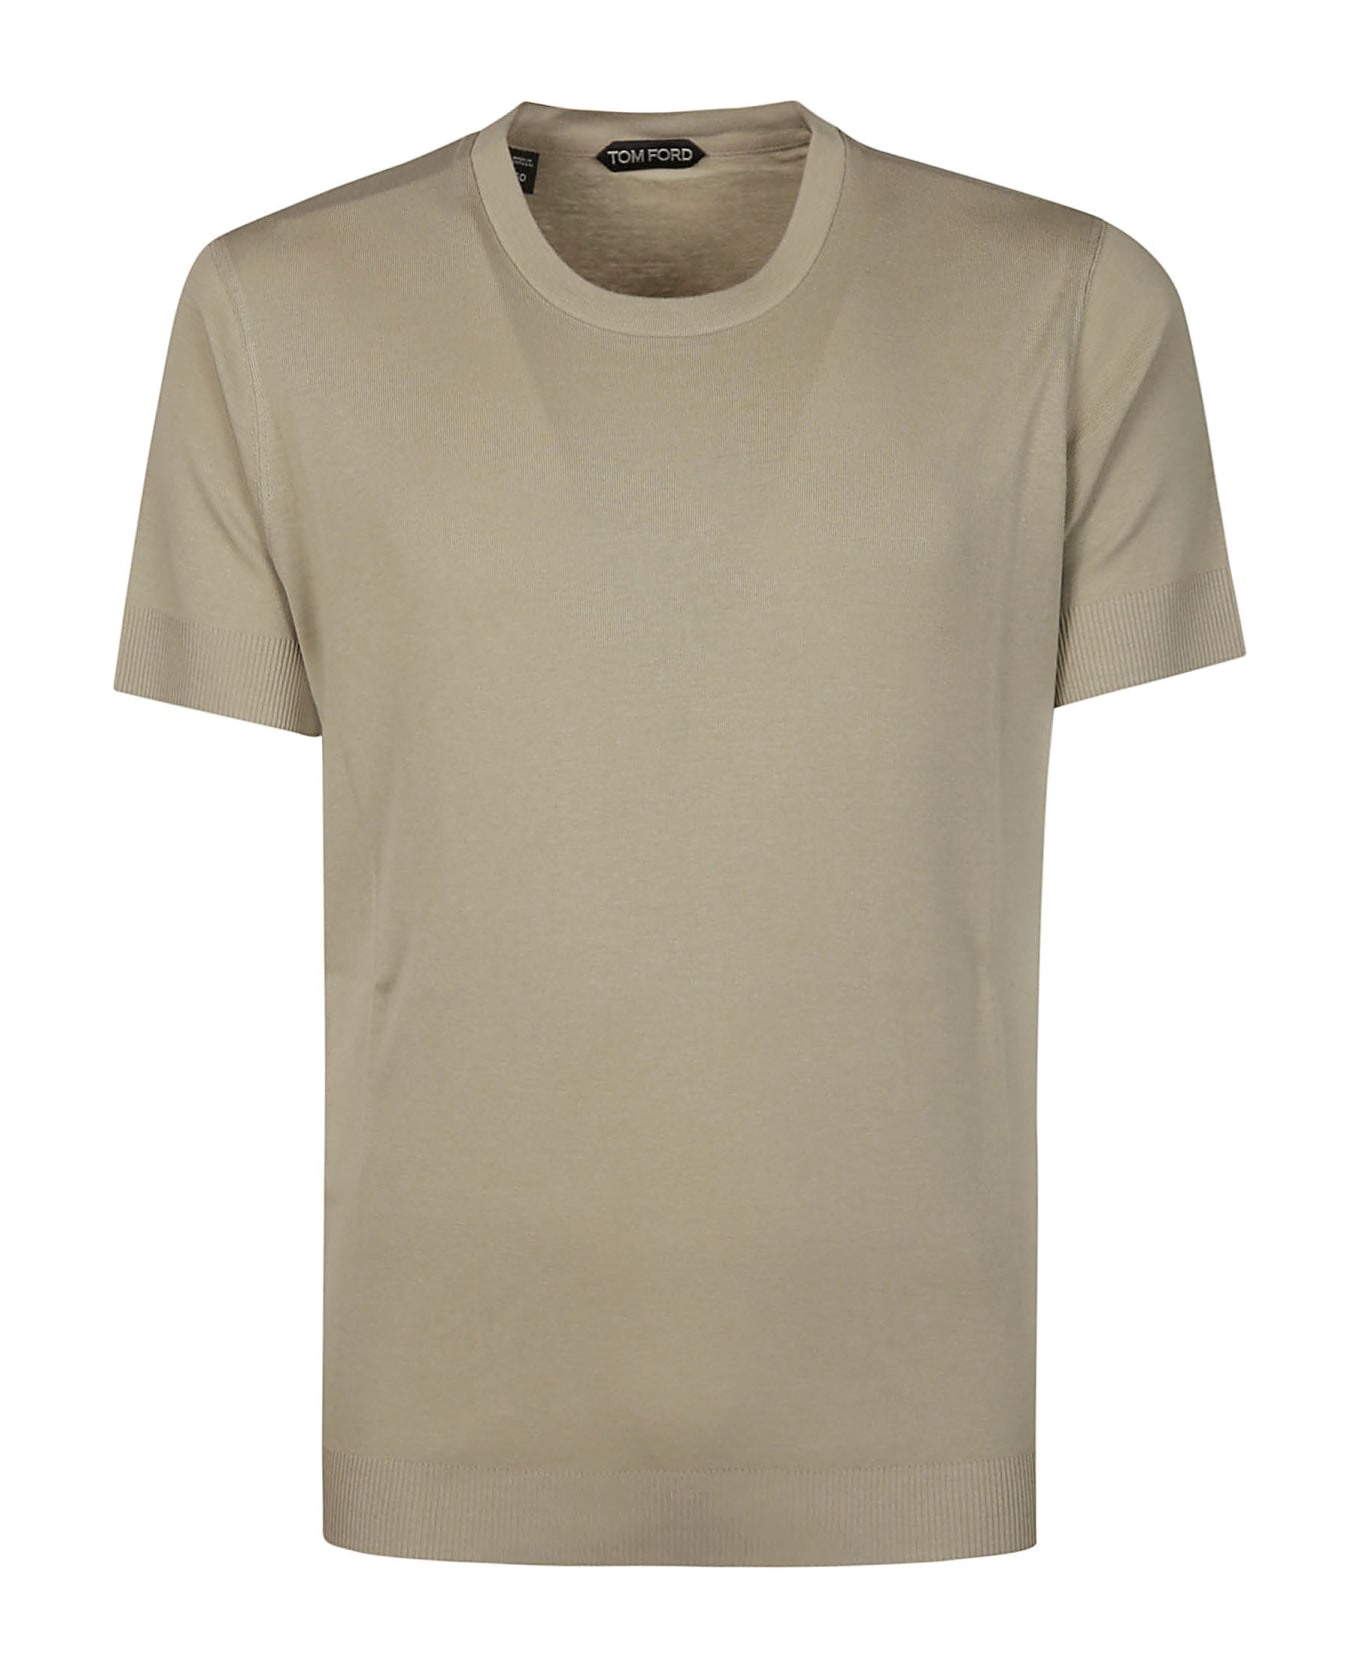 Tom Ford Placed Rib T-shirt - Pale Olive